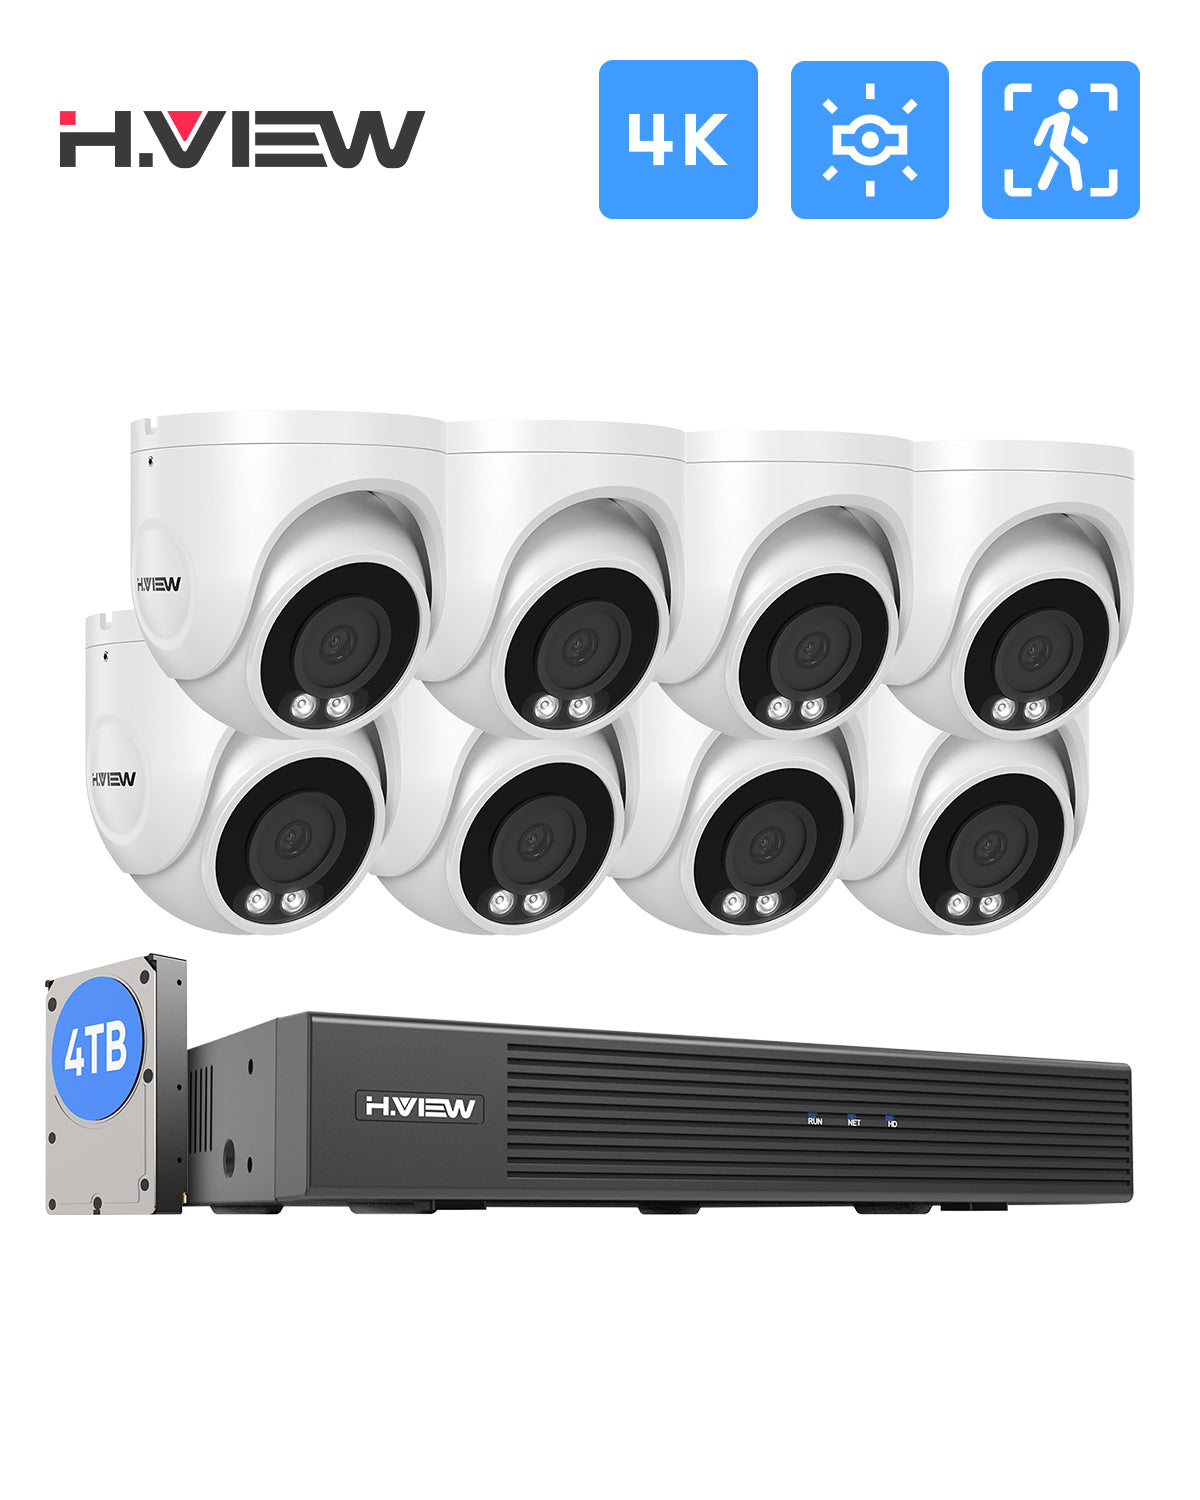 H.View 4K（8MP）Ultra HD 8チャンネルPOEセキュリティシステムのオーディオレコードドームカメラ — H.VIEW Shop